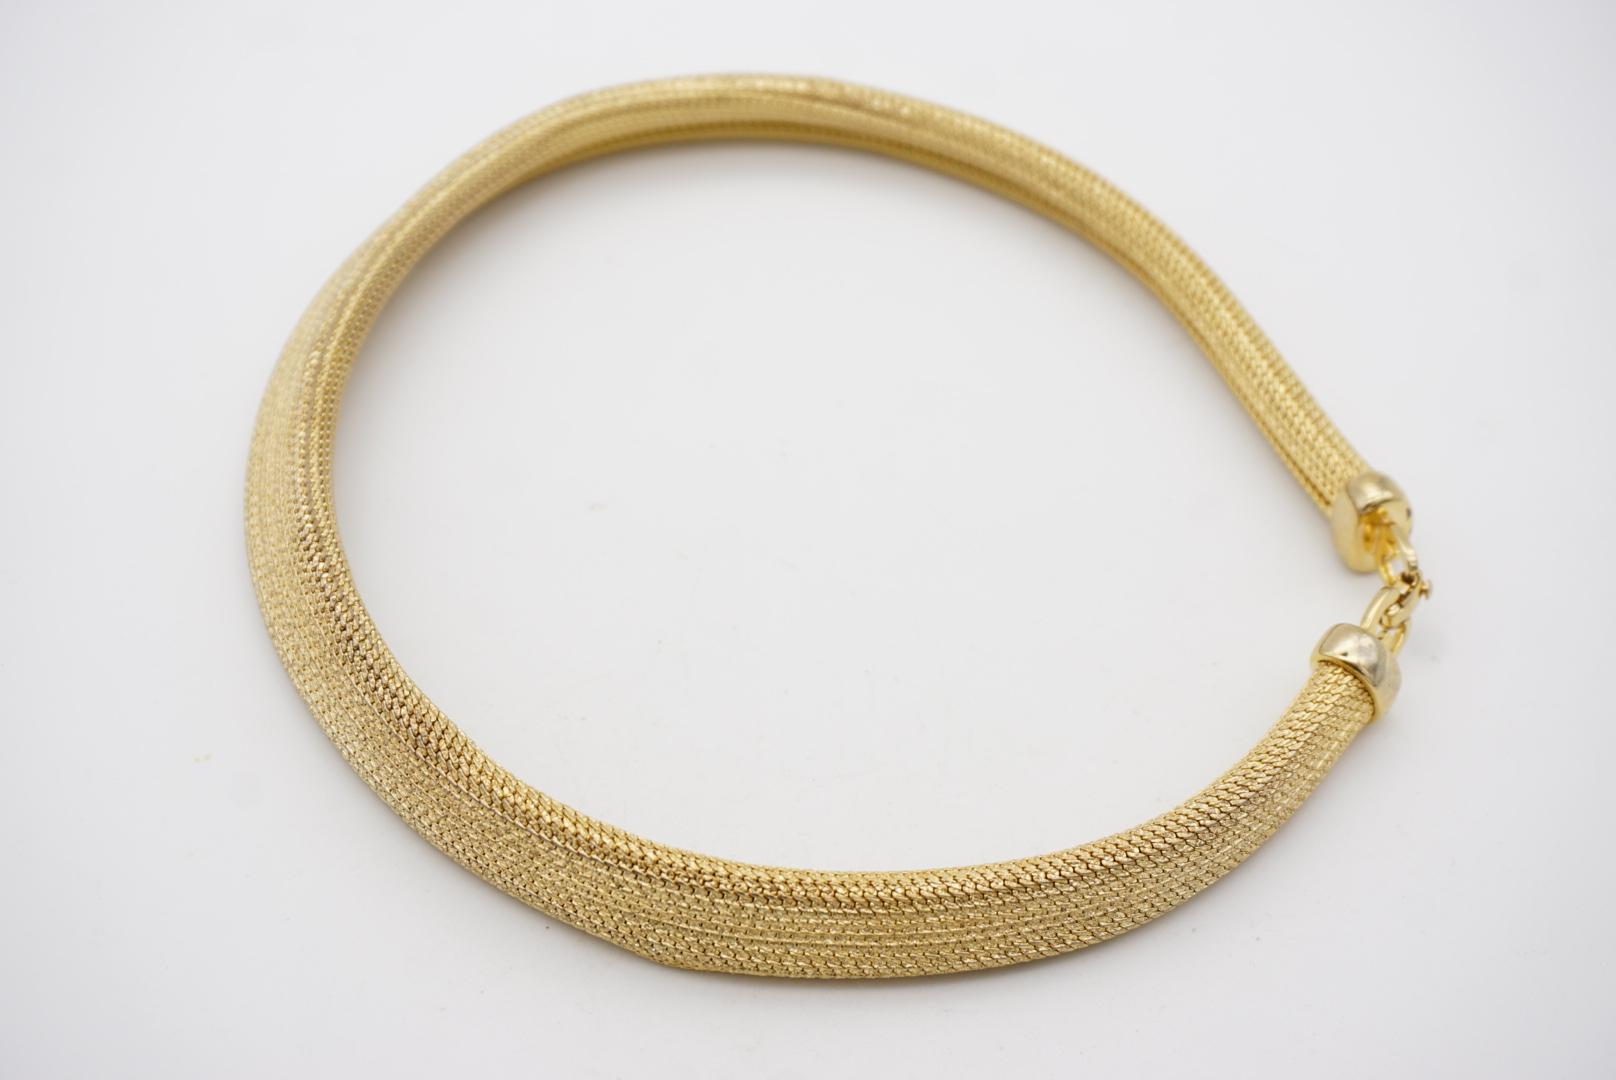 Christian Dior GROSSE 1970s Vintage Mesh Weave Snake Omega Chunky Gold Necklace For Sale 5